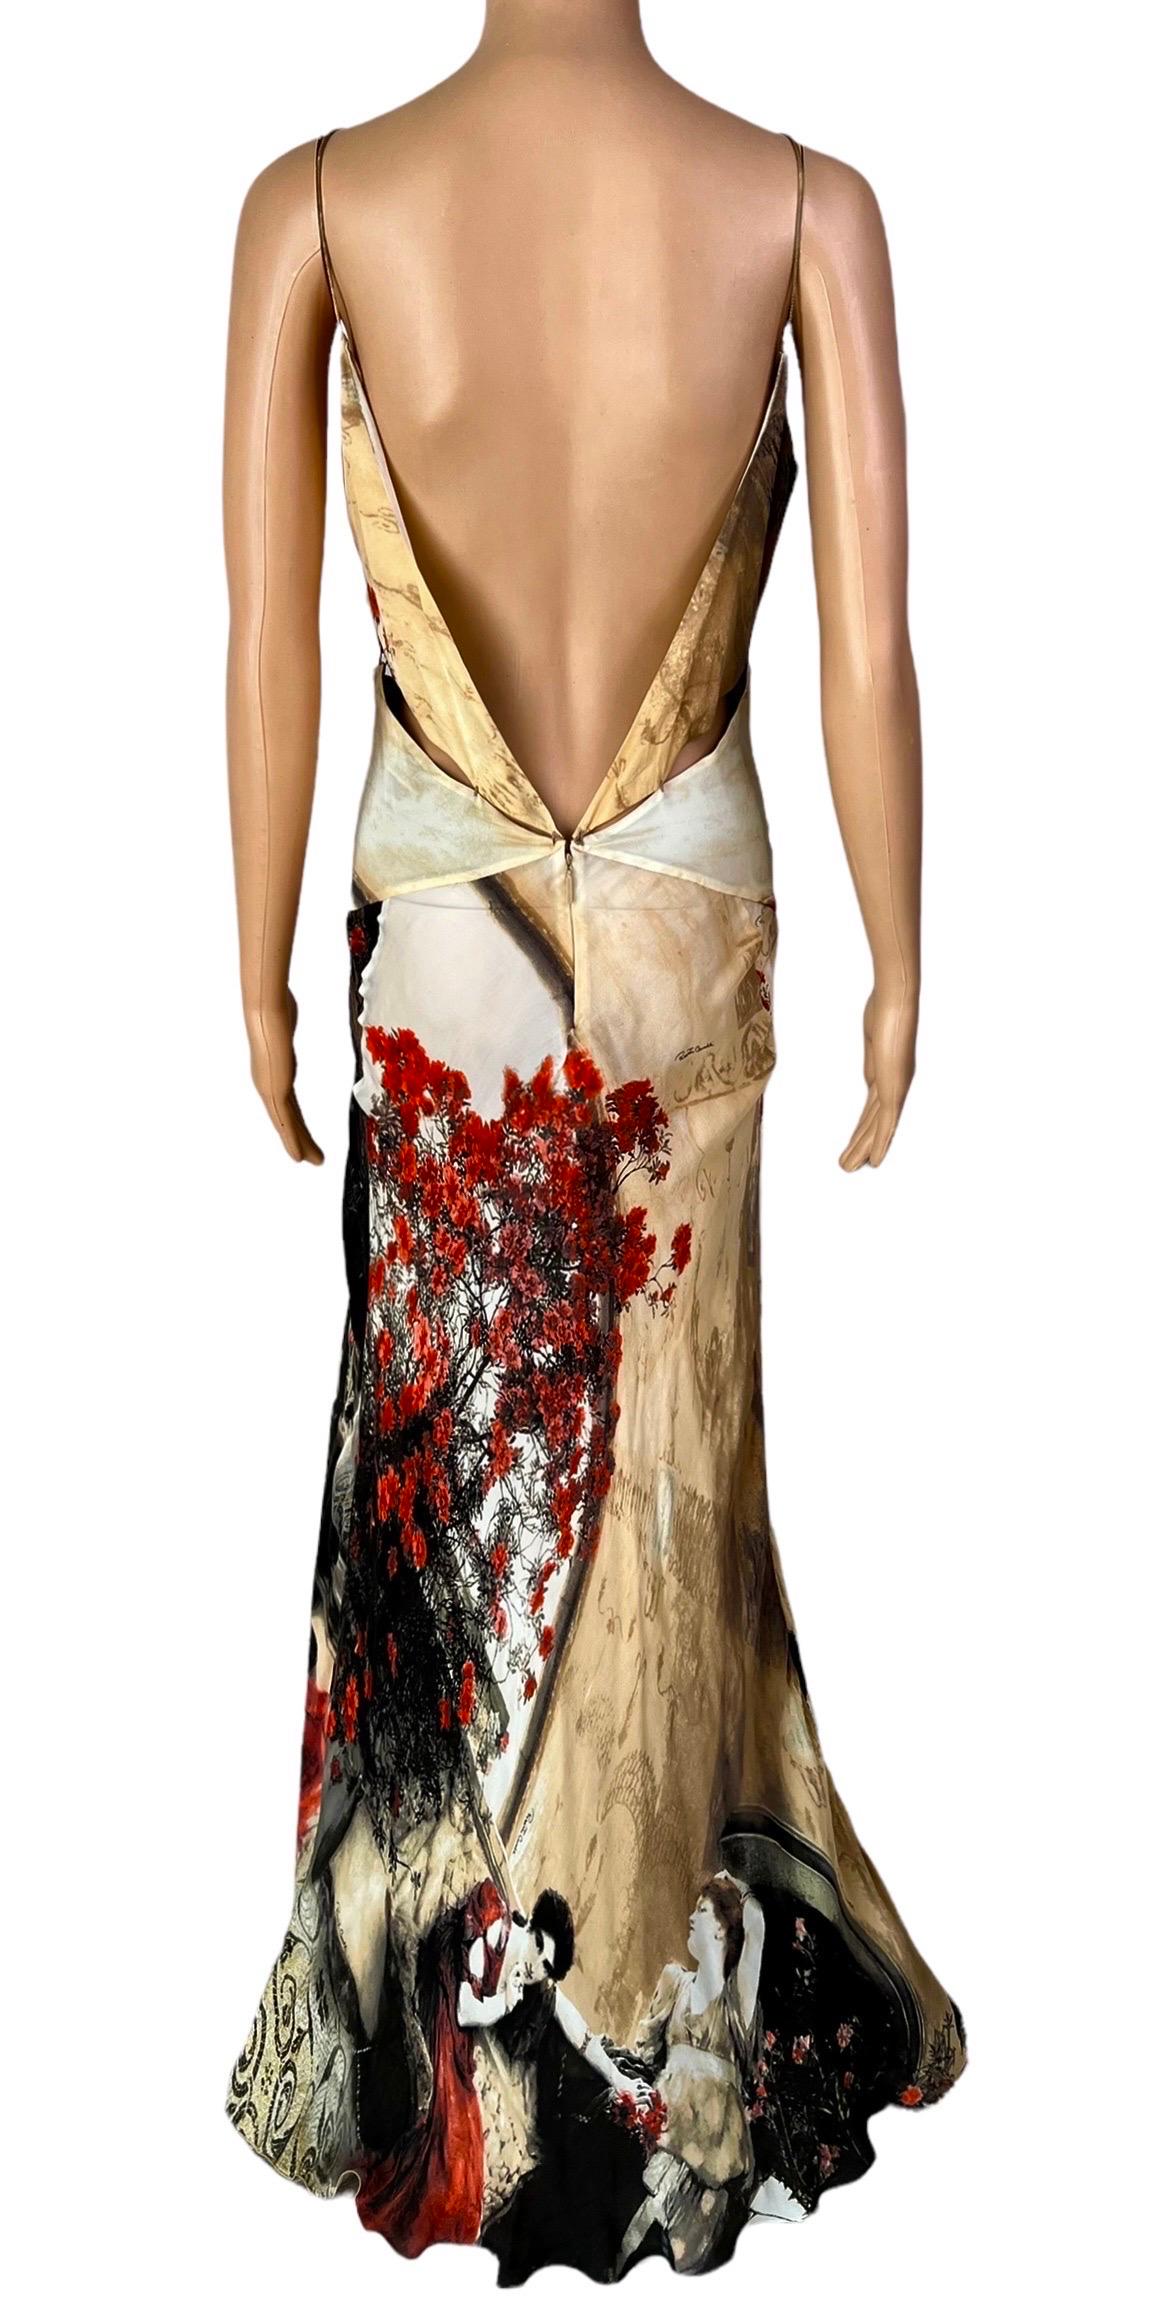 Beige Roberto Cavalli S/S 2004 Runway Cutout High Slit Silk Slip Evening Dress Gown For Sale